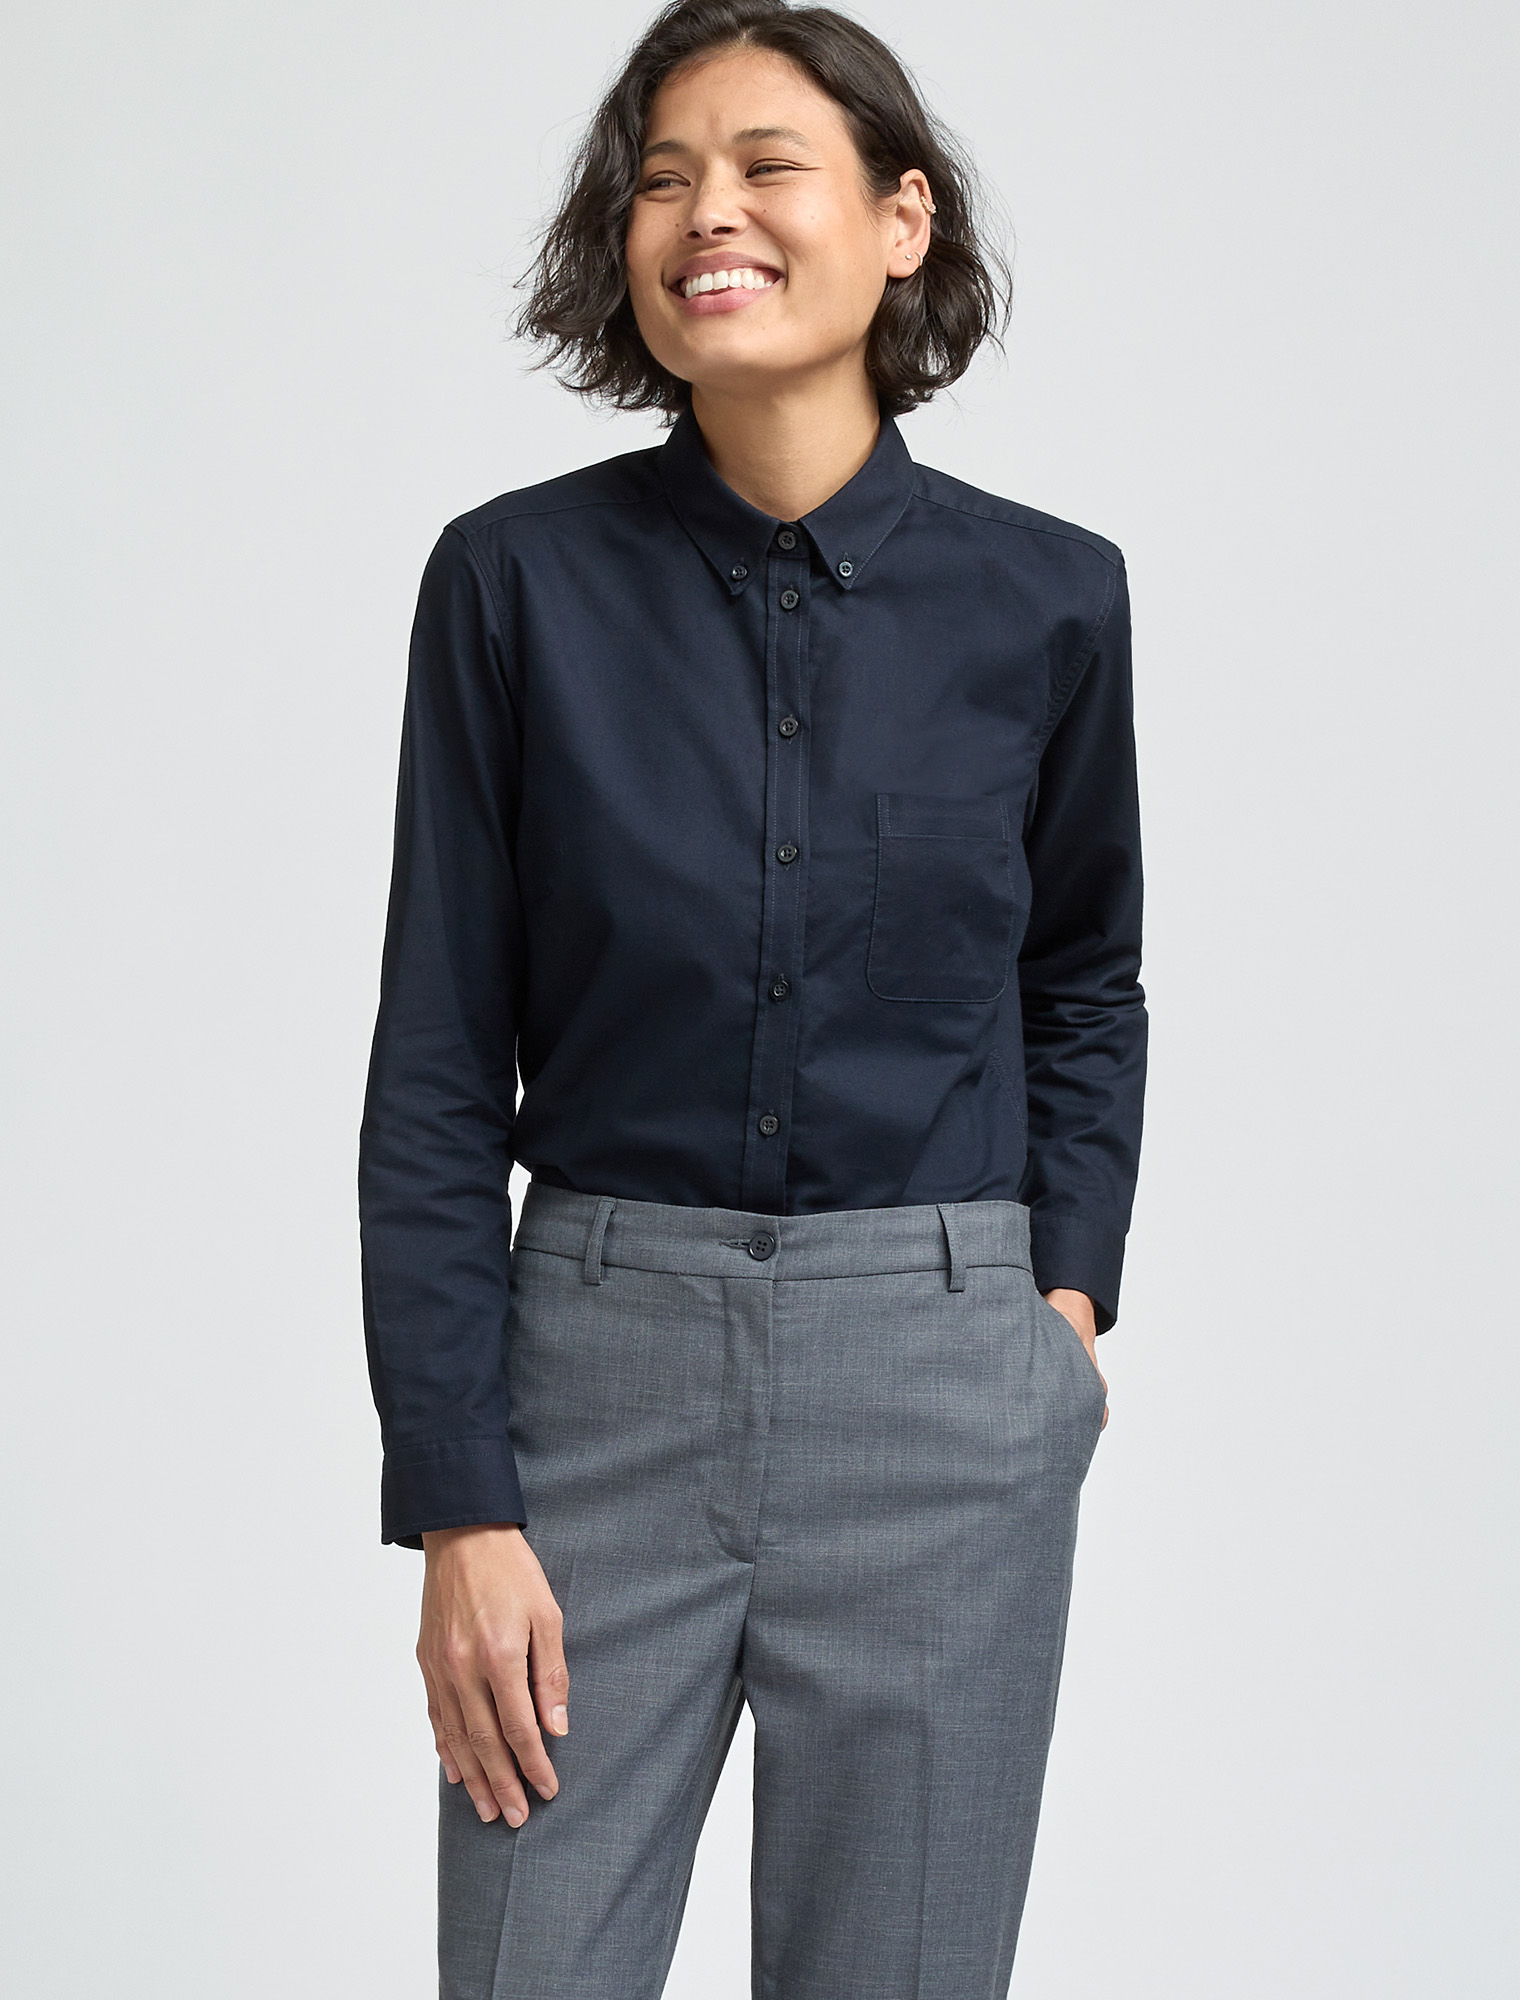 Women's Smith Oxford Long Sleeve Shirt - Midnight Navy Blue